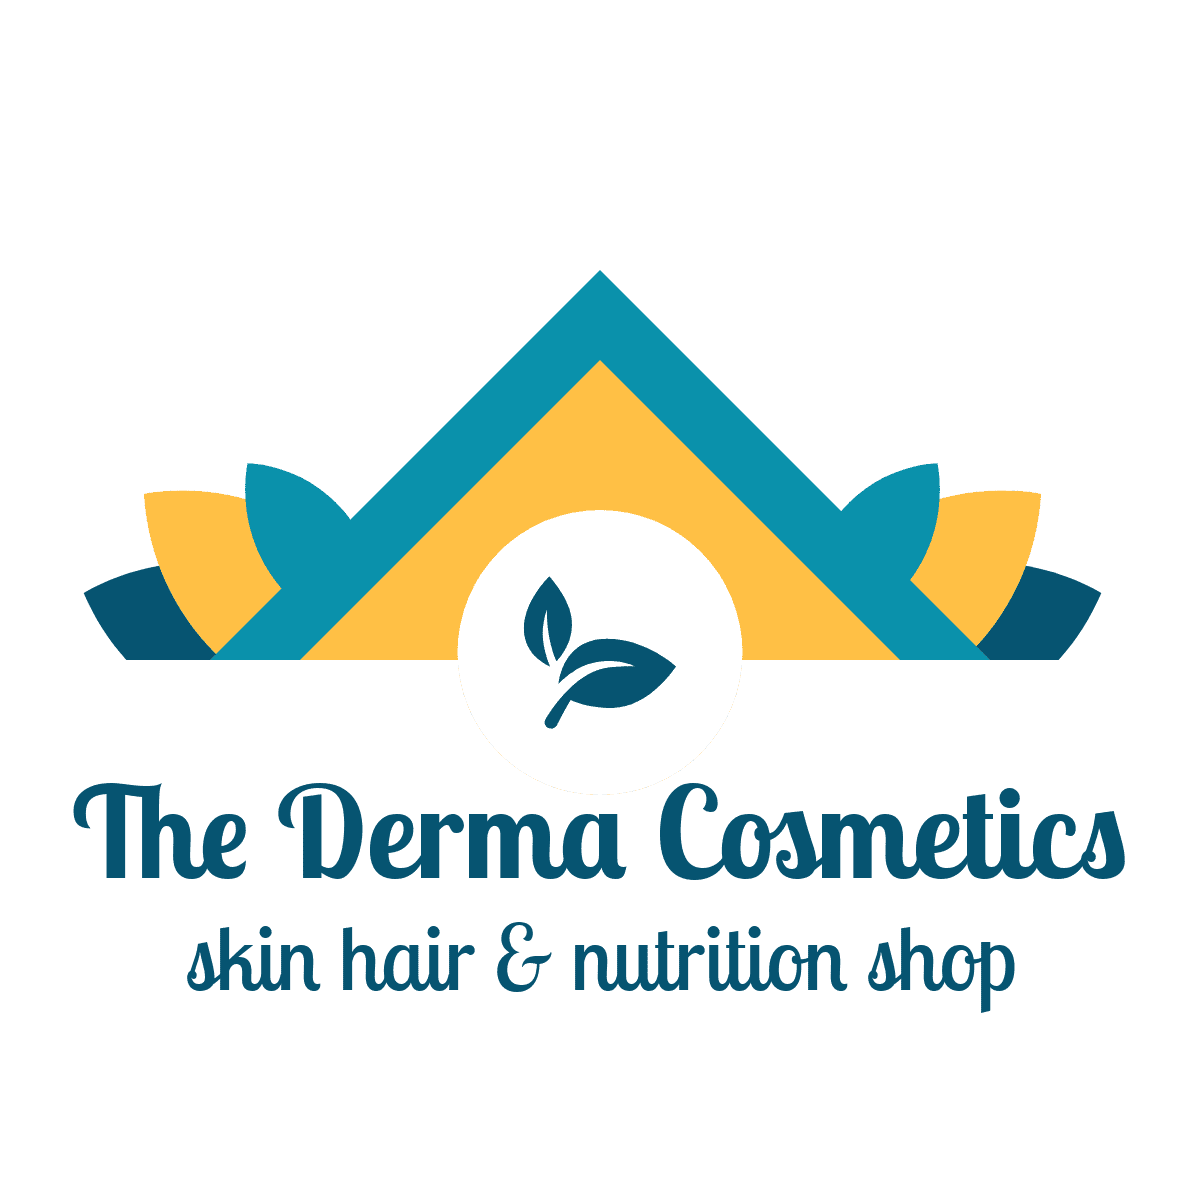 buy best Hair Serum at best price in india hair growth serum online – The  derma cosmetics